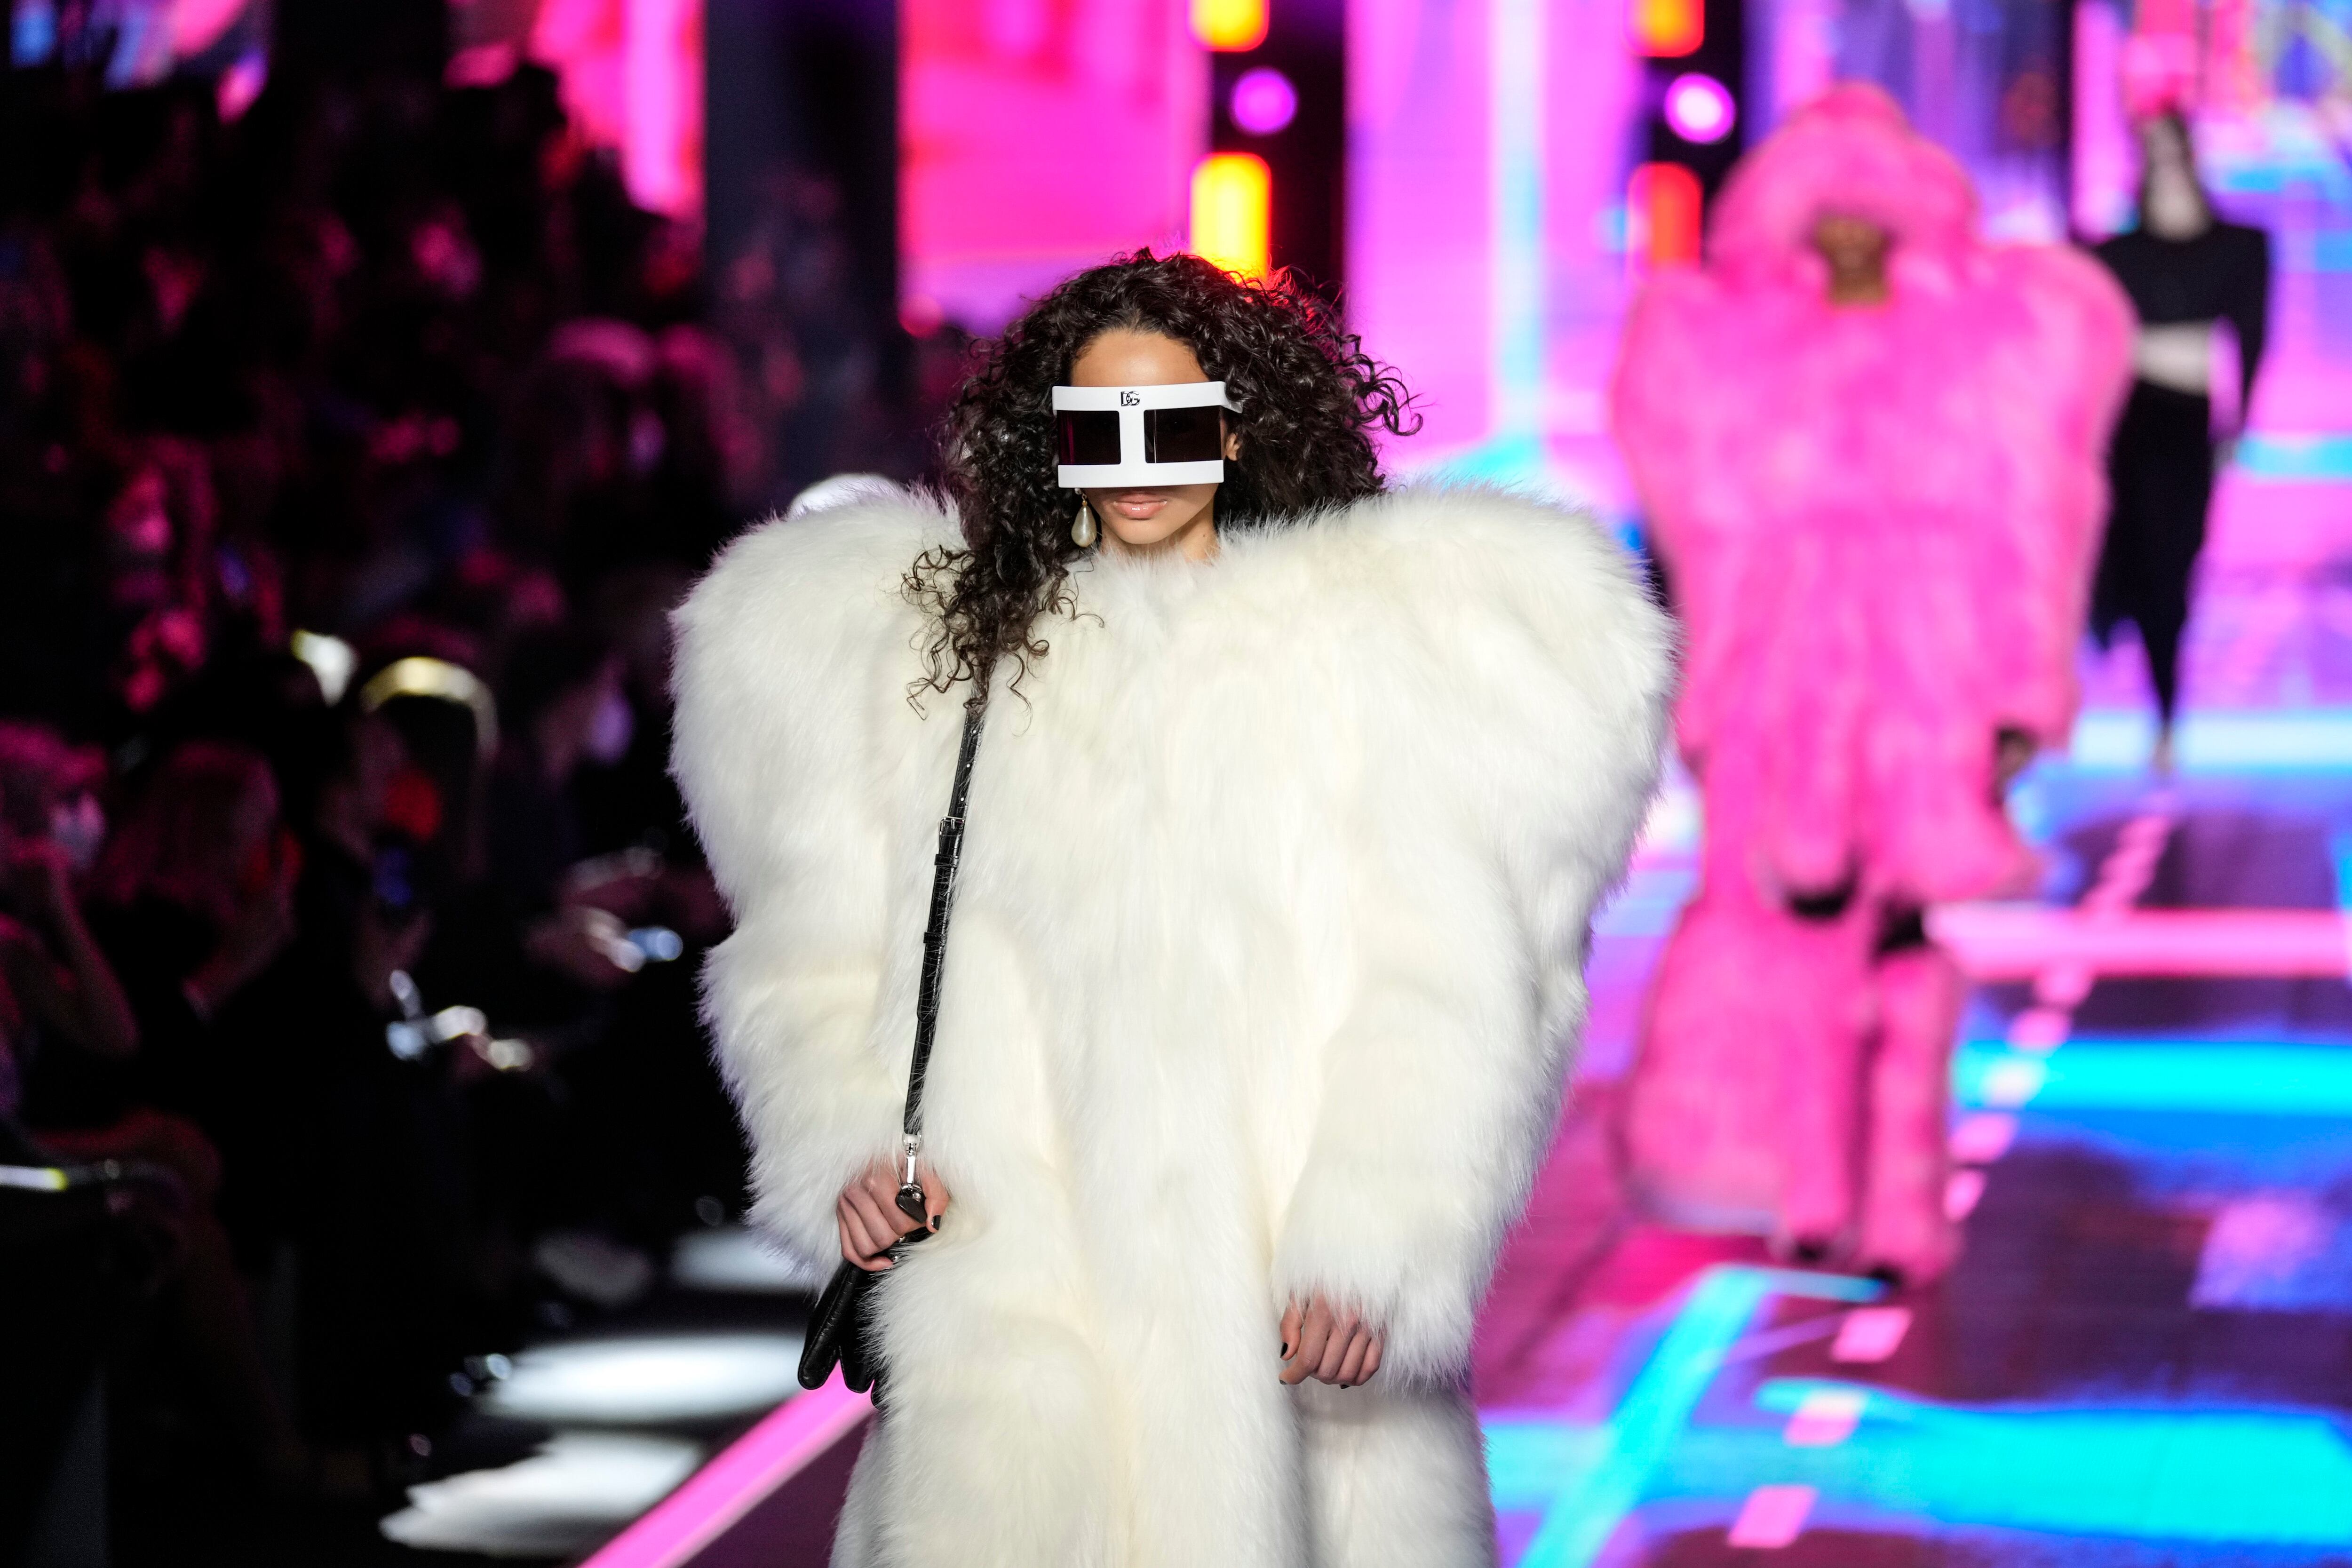 Sharon Stone takes in Dolce&Gabbana at relaxed Milan fashion